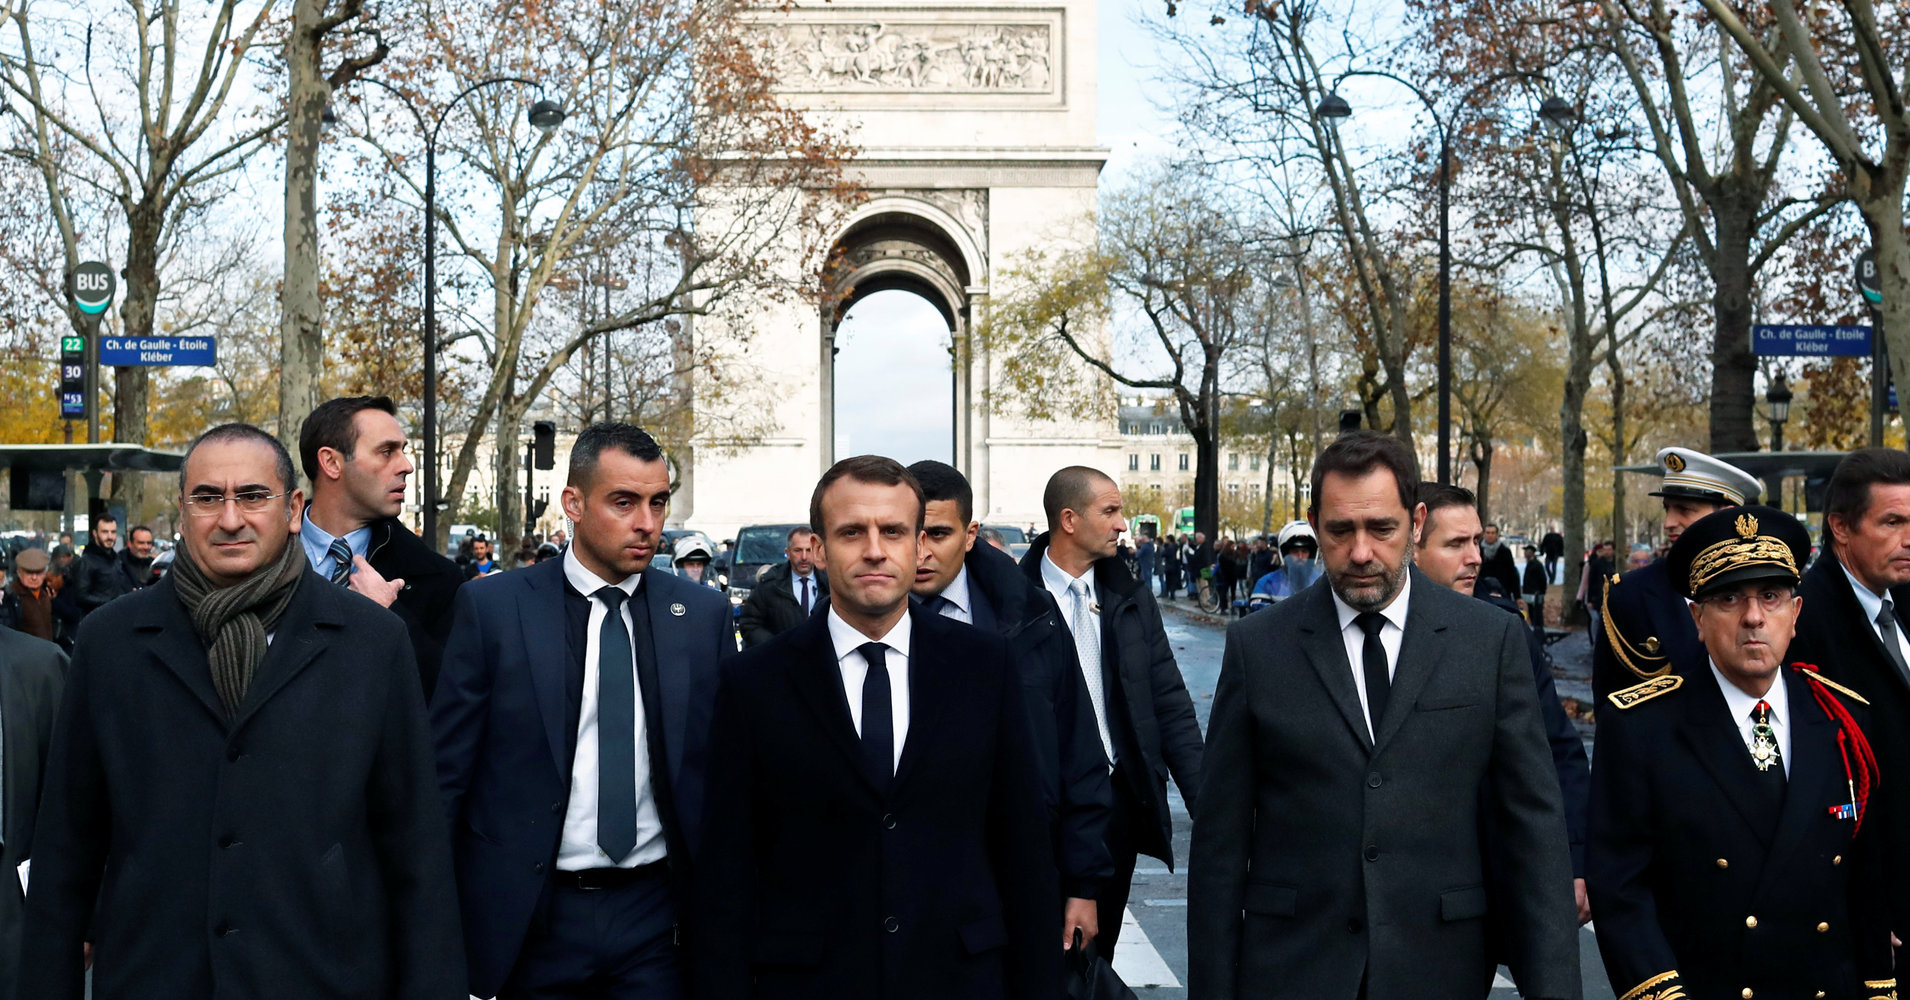 Macron Tours Damaged Paris Site In Aftermath Of Riots